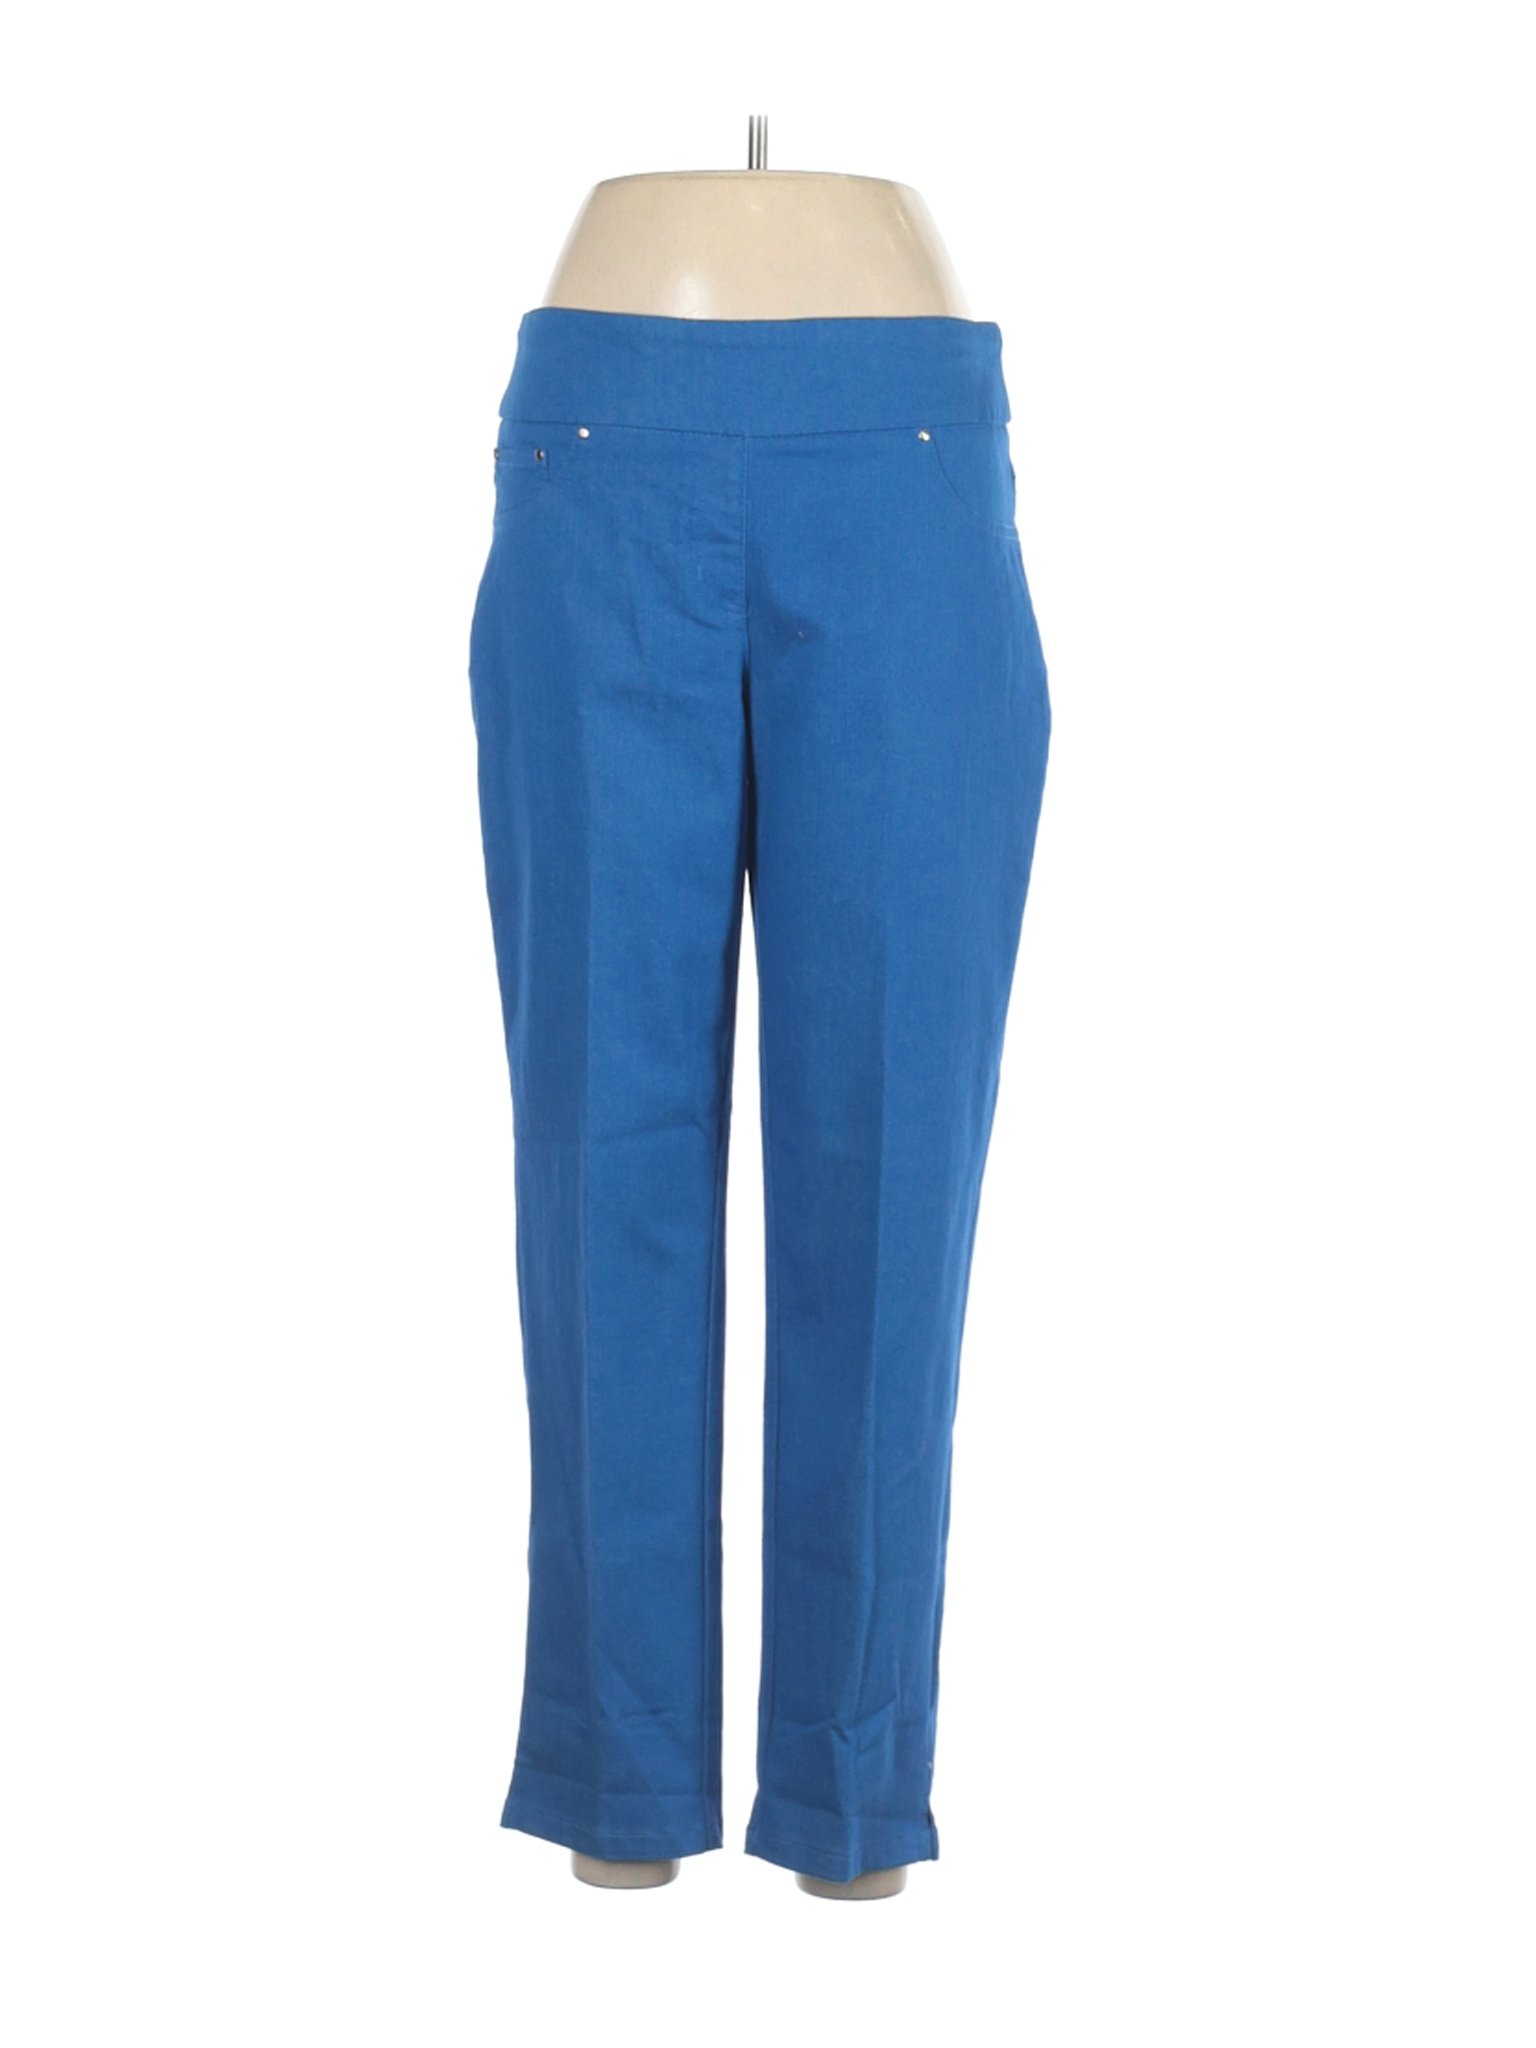 NWT Ruby Rd. Women Blue Casual Pants 8 | eBay